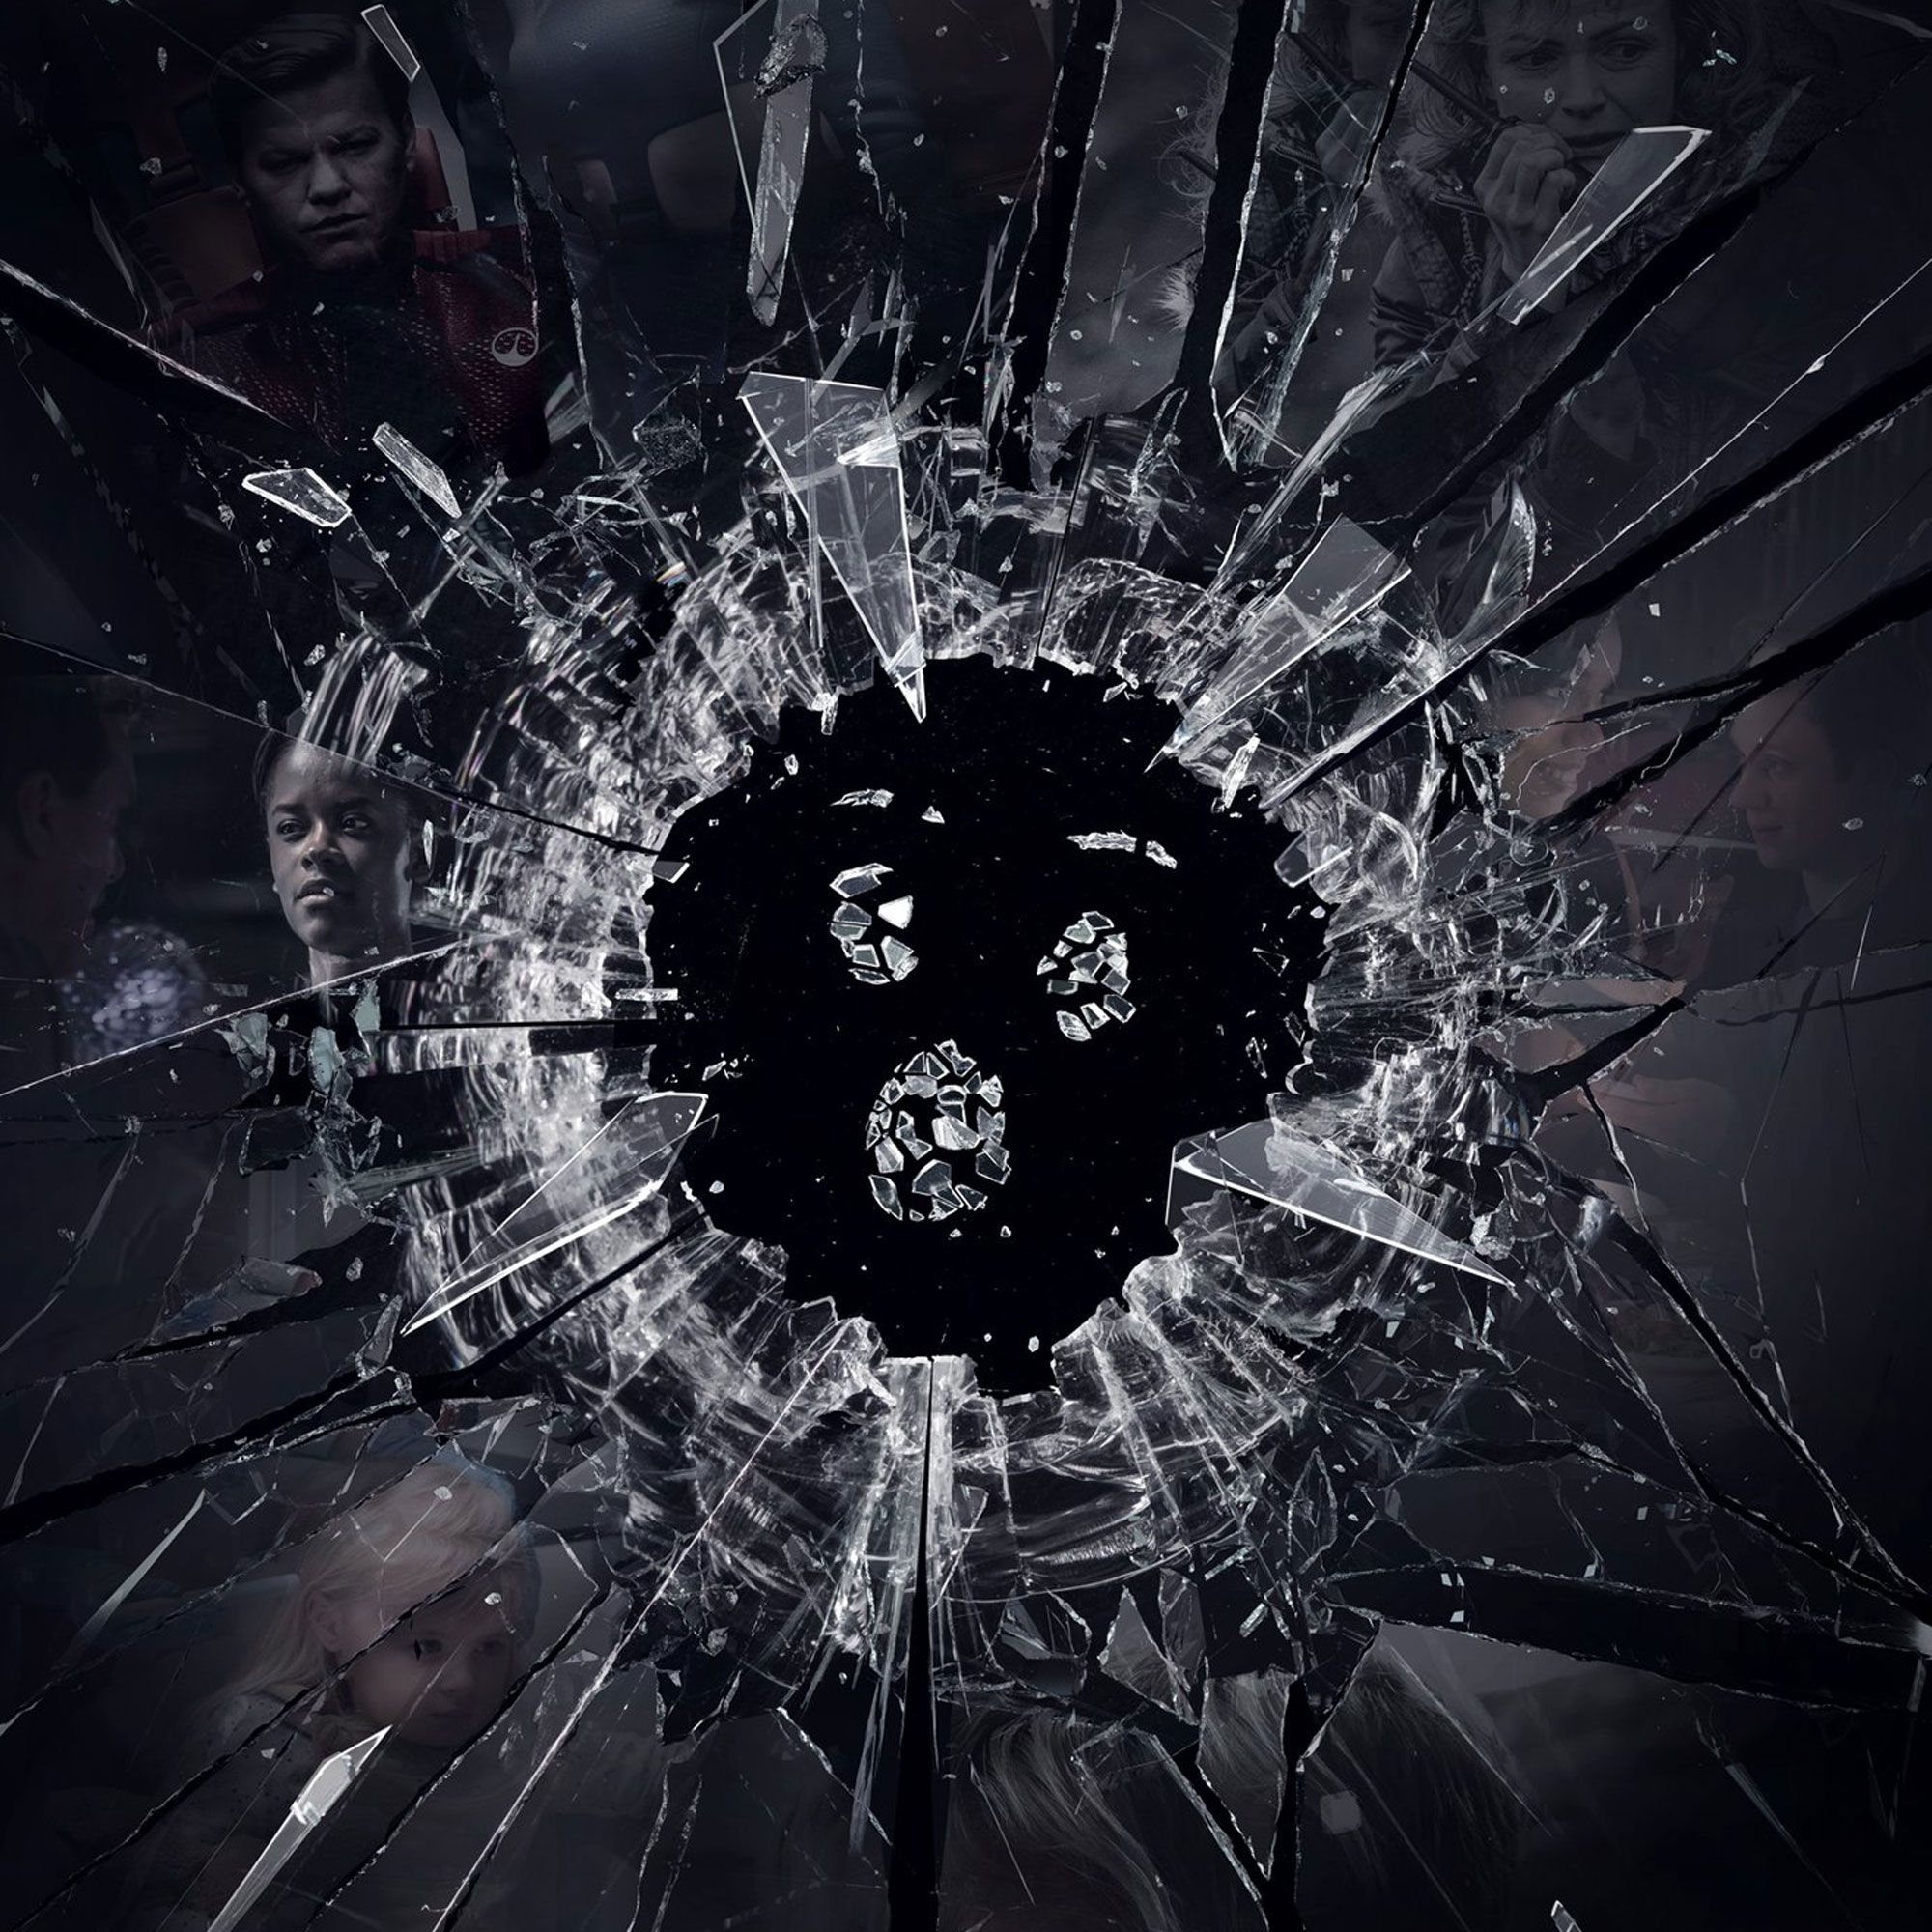 Black Mirror season 6 - Cast, episodes, release date and plot